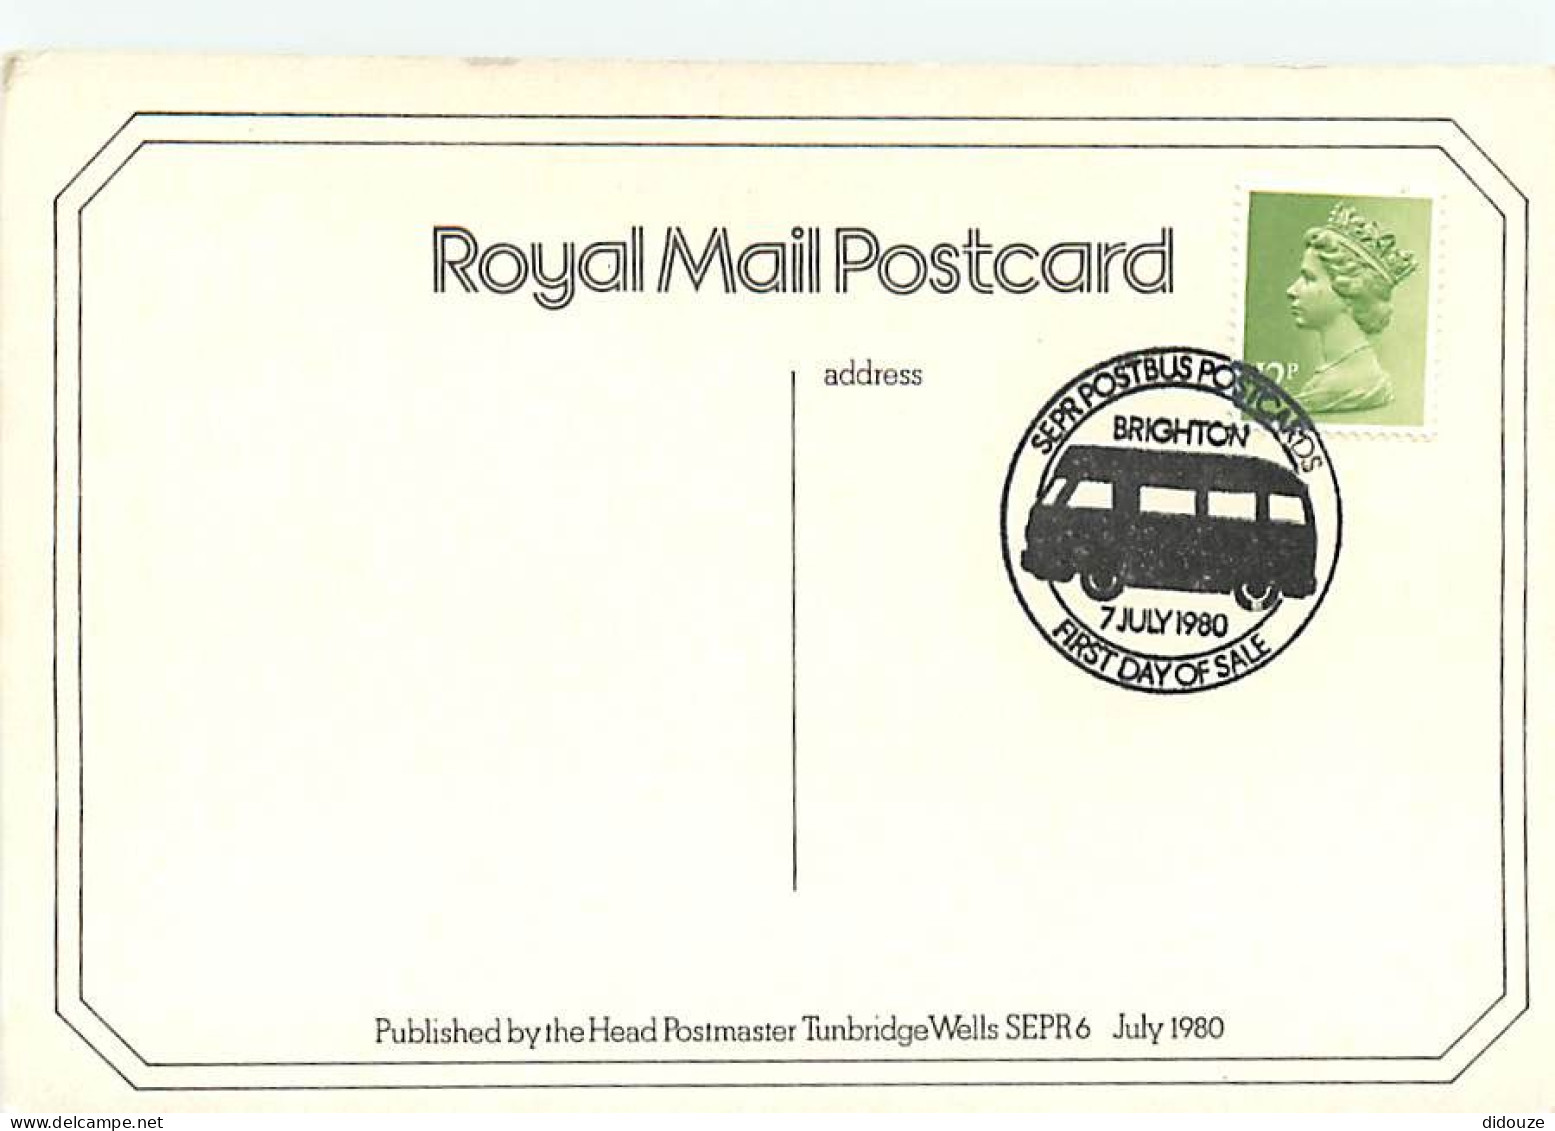 Automobiles - Royaume-Uni - The Tunbridge Wells - Mayfield Royal Mail Postbus - Mayfield High Street - SEPR Postbus Post - PKW